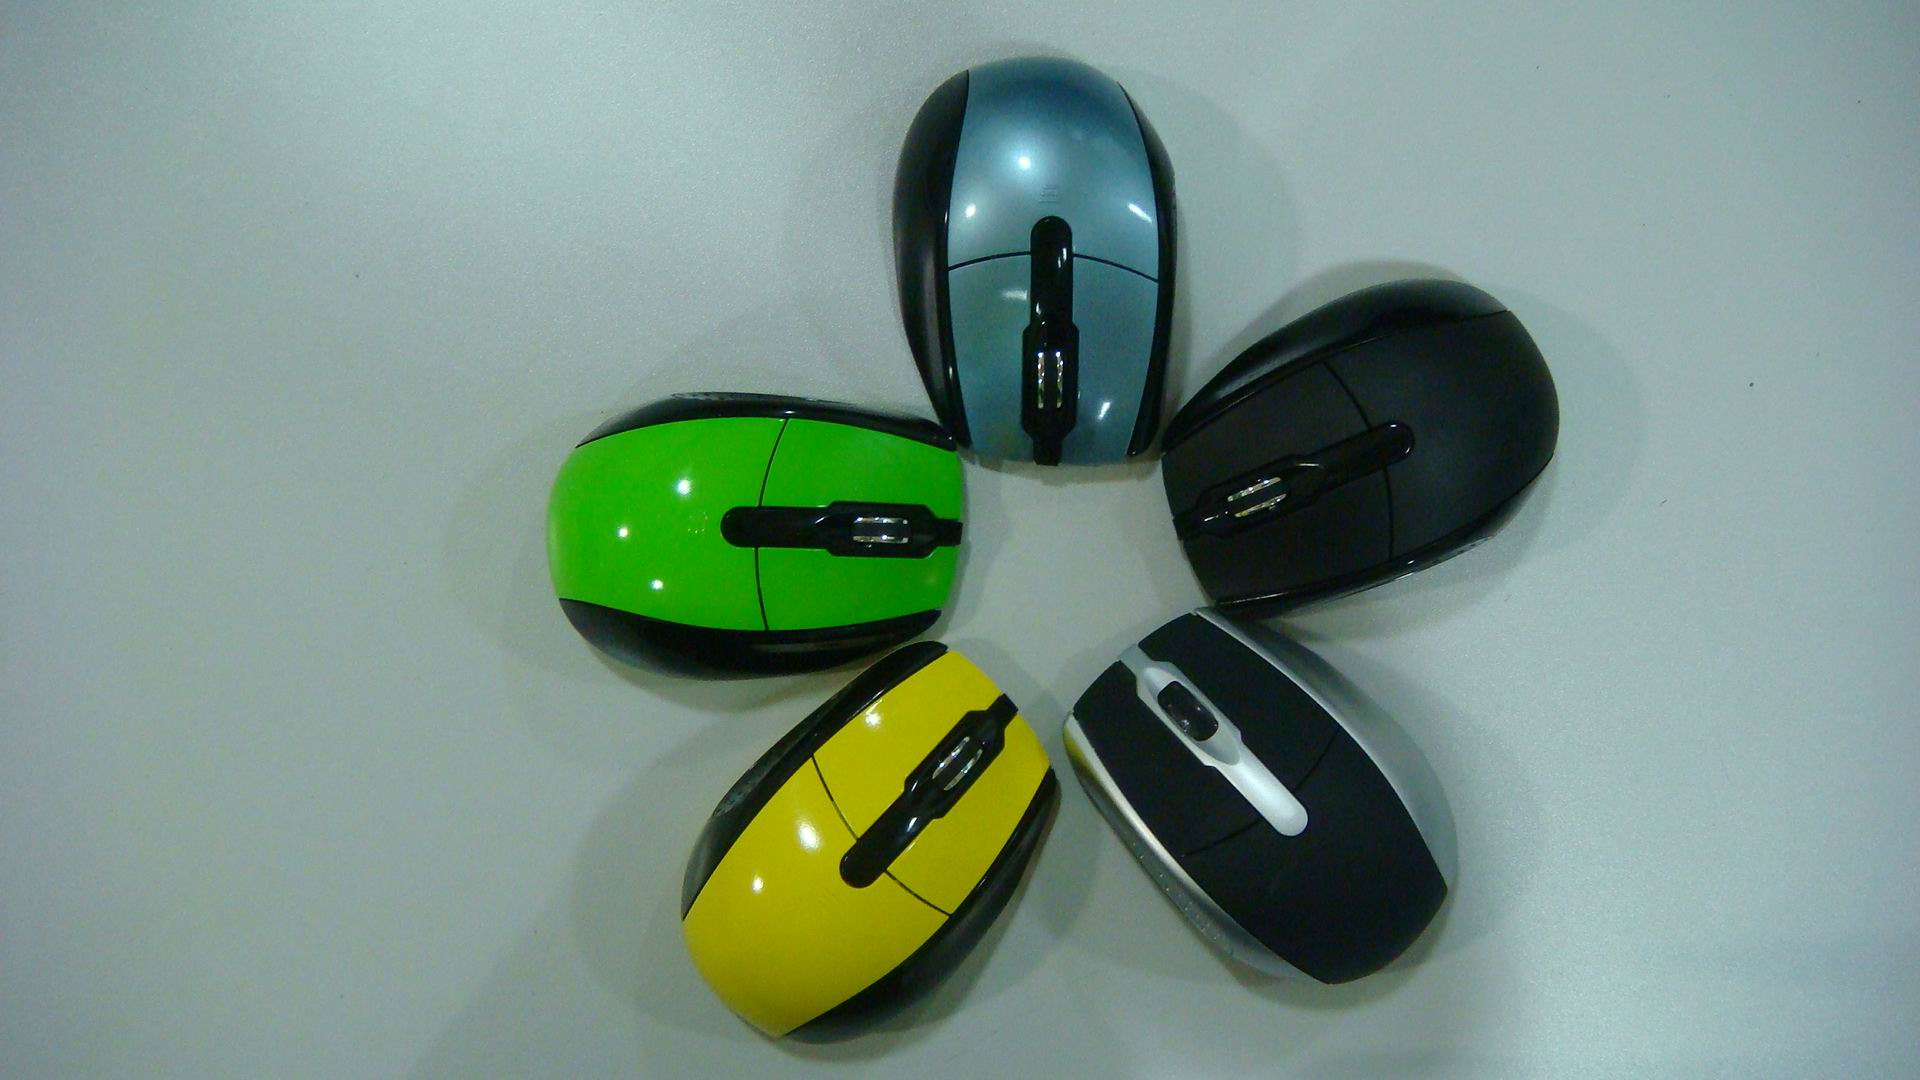 2.4G NANO 3D wireless optical mouse